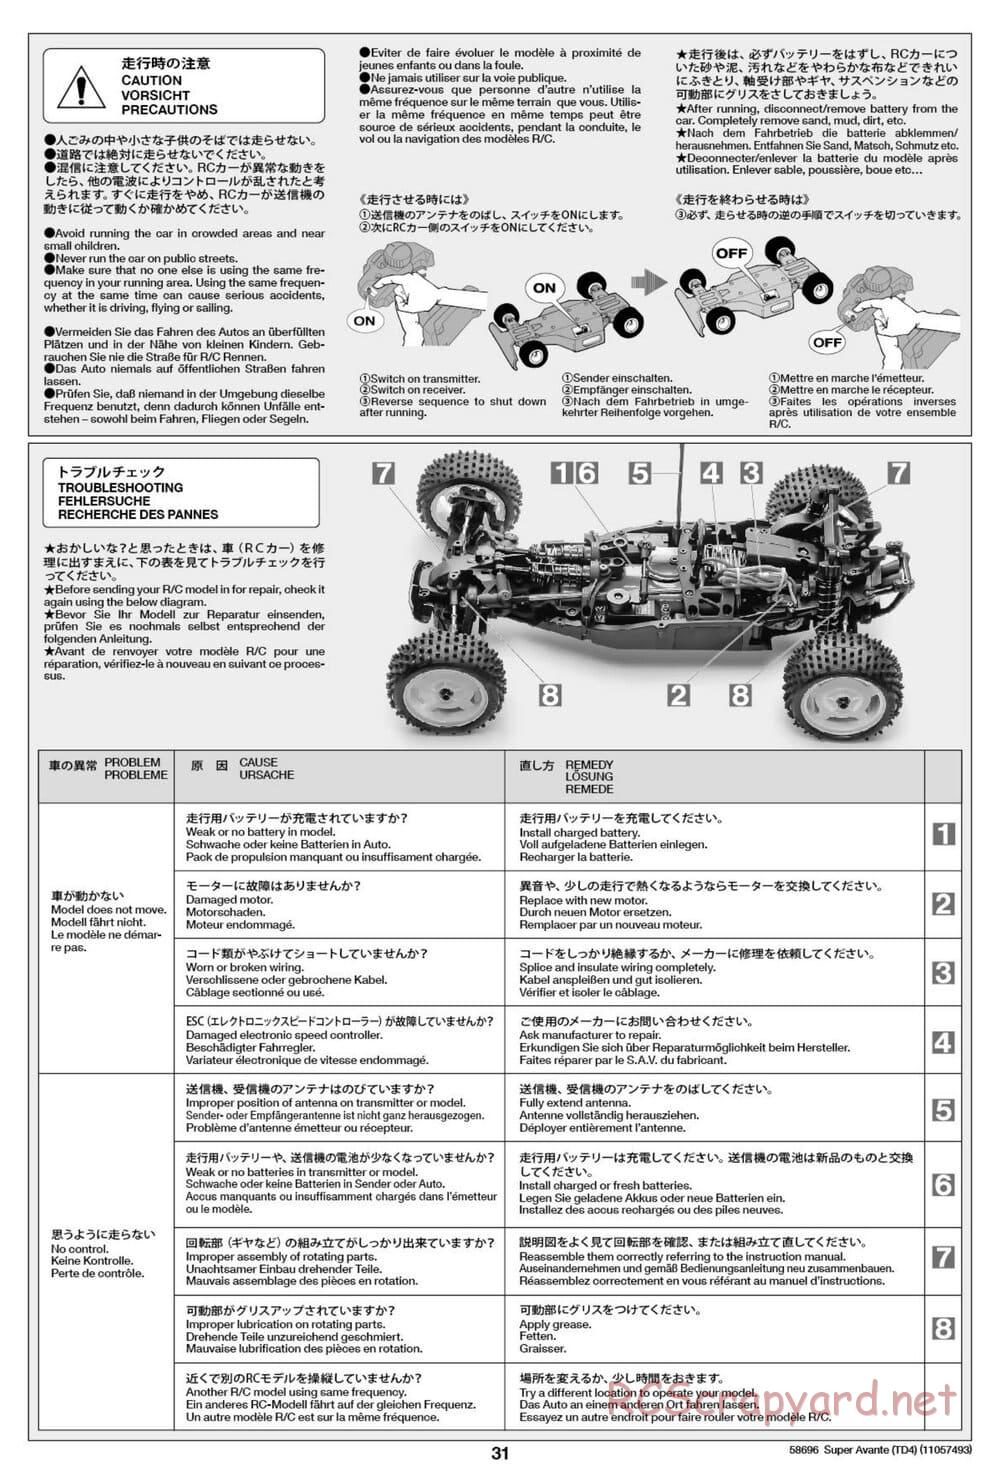 Tamiya - Super Avante - TD4 Chassis - Manual - Page 32